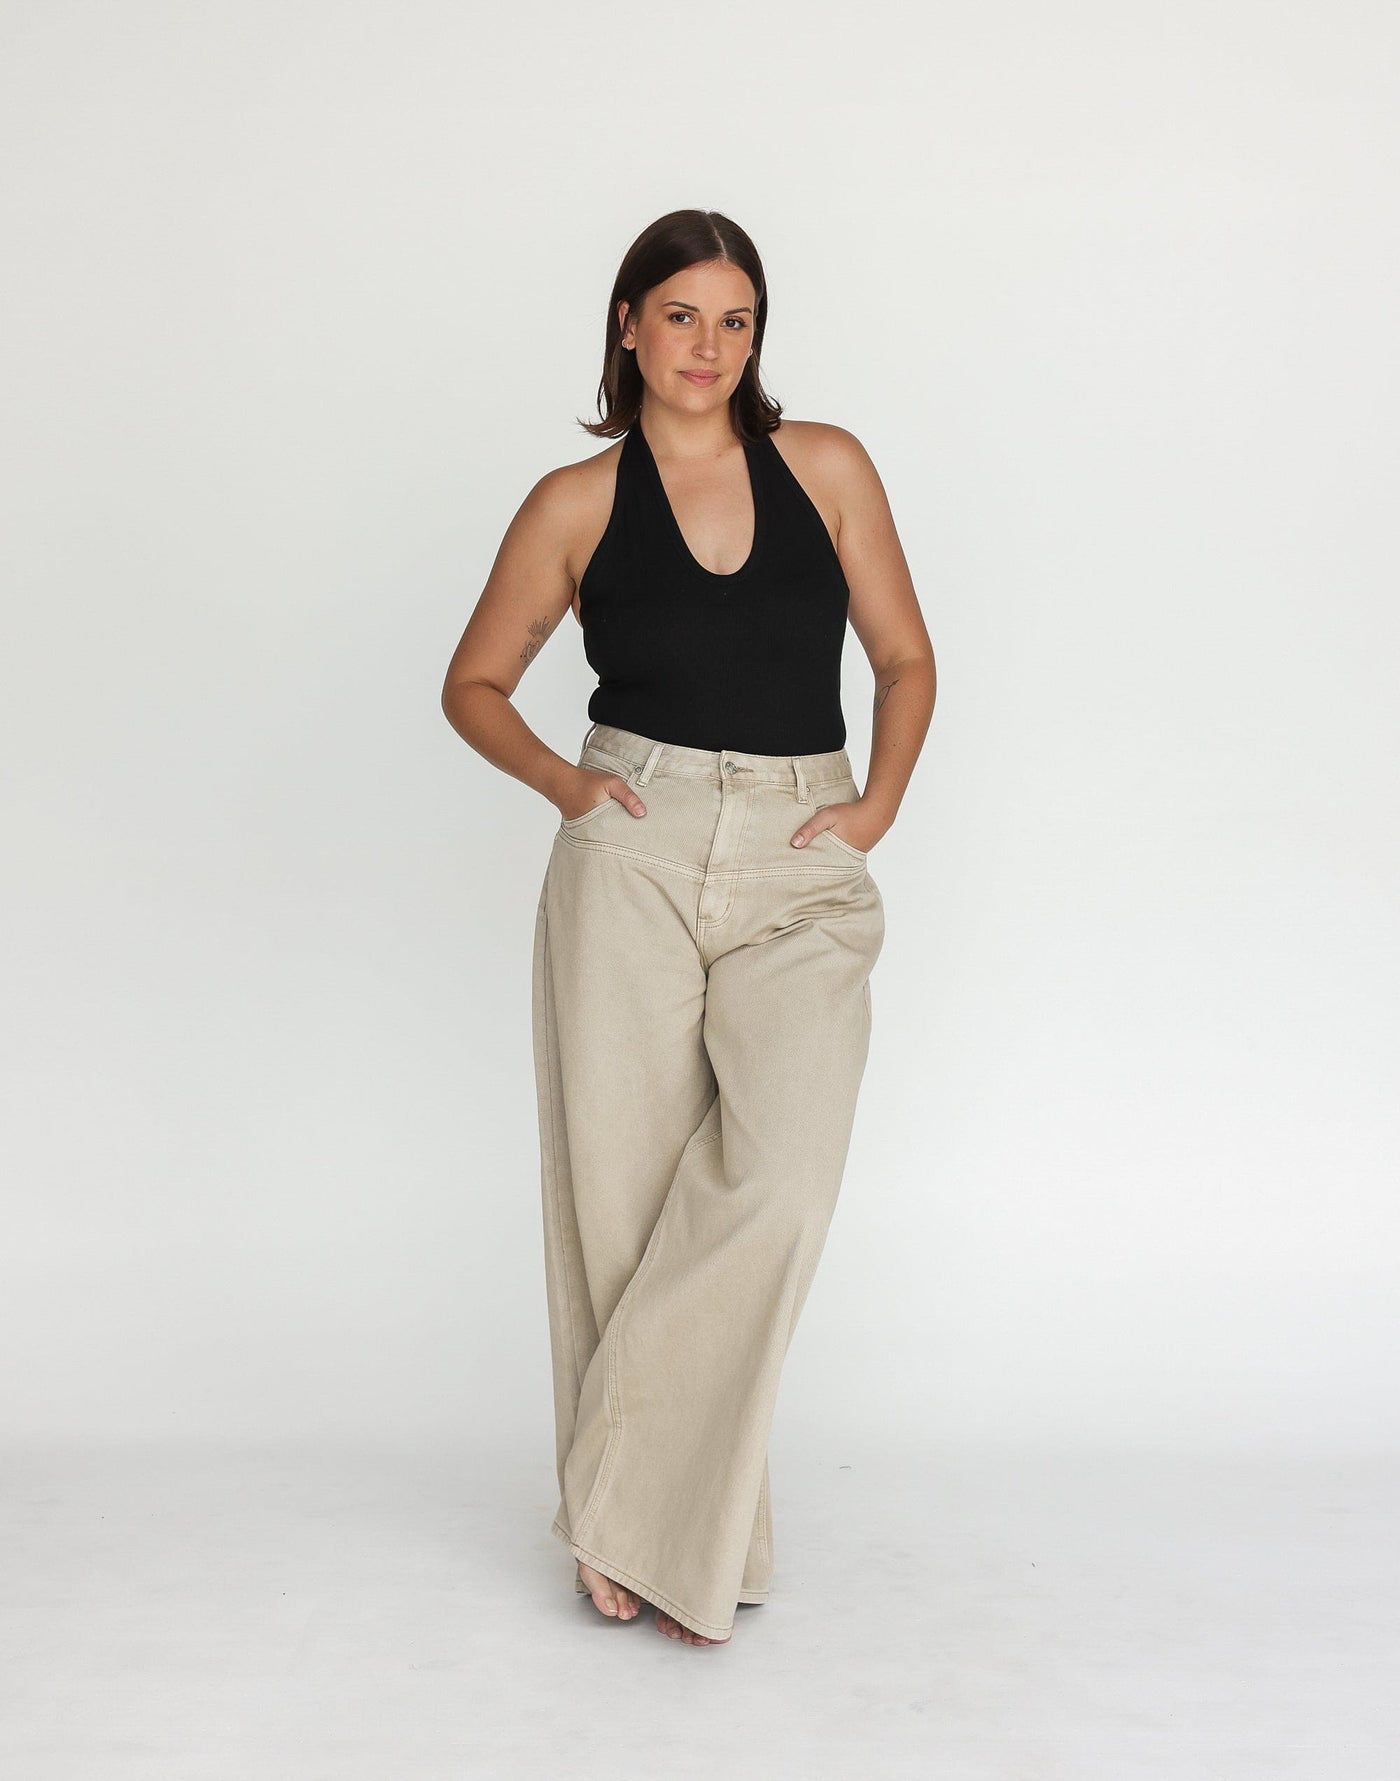 Arwen Bodysuit (Black) | CHARCOAL Exclusive - Ribbed Low Neck Halter Bodysuit - Women's Top - Charcoal Clothing